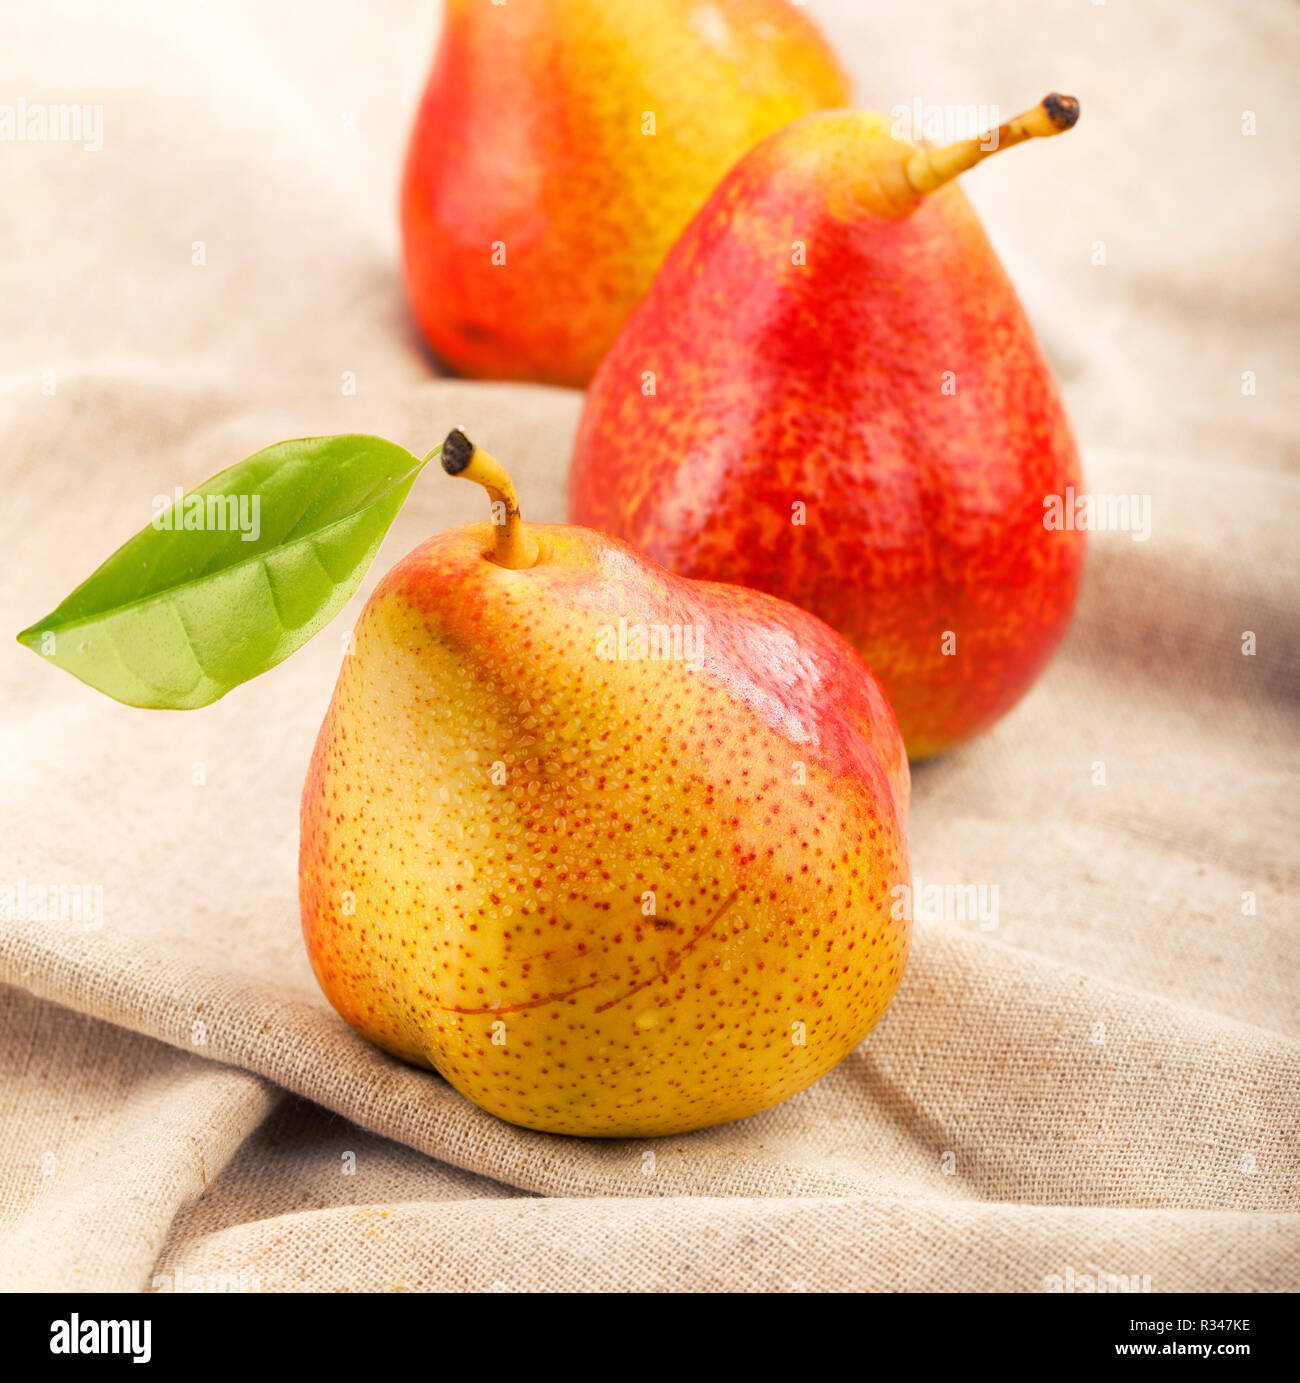 juicy pears Stock Photo